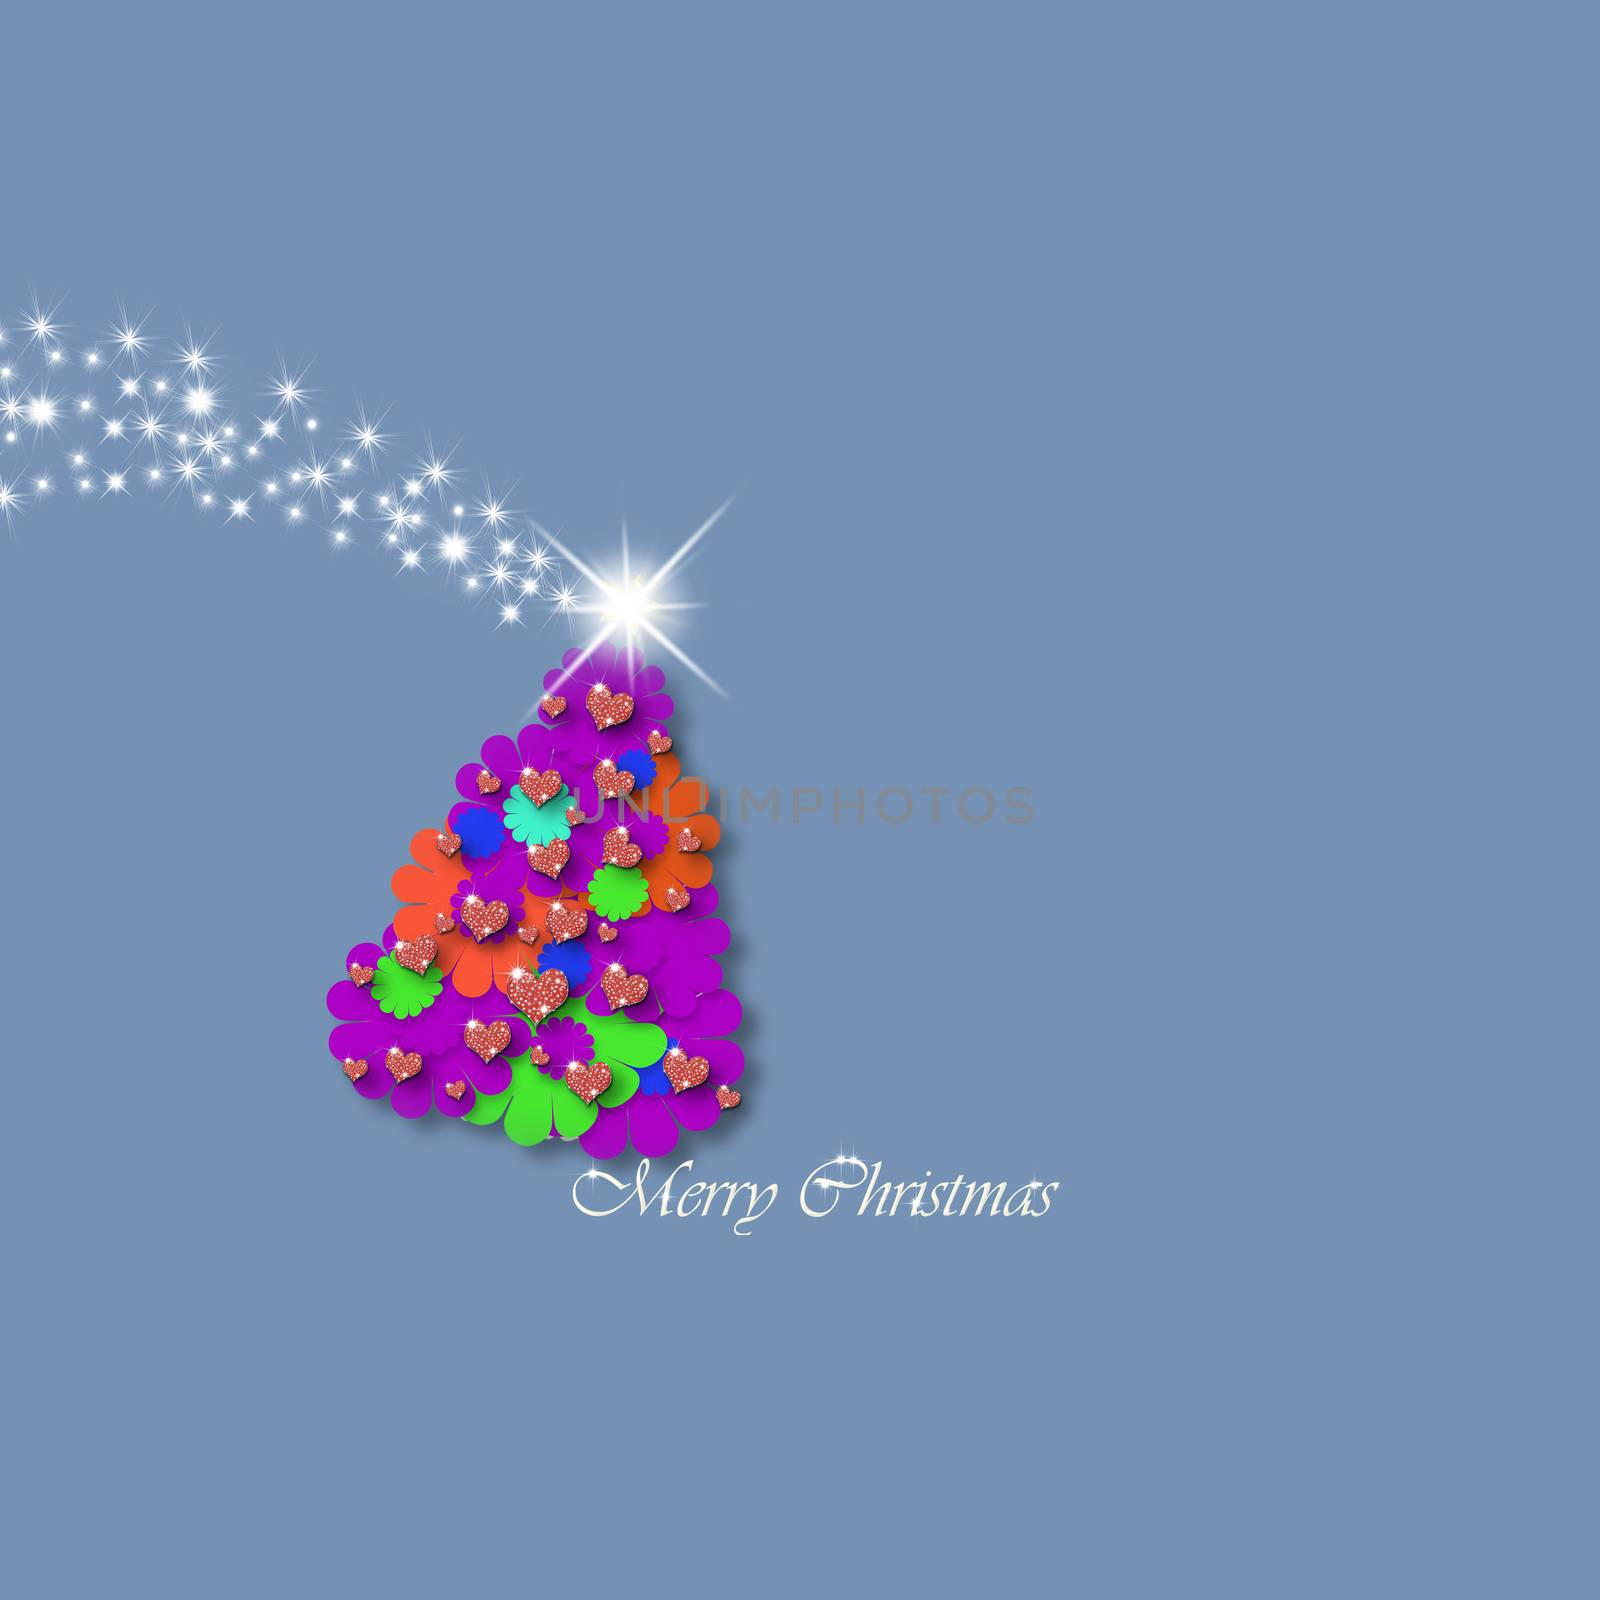 Christmas tree, Merry Christmas greeting card background